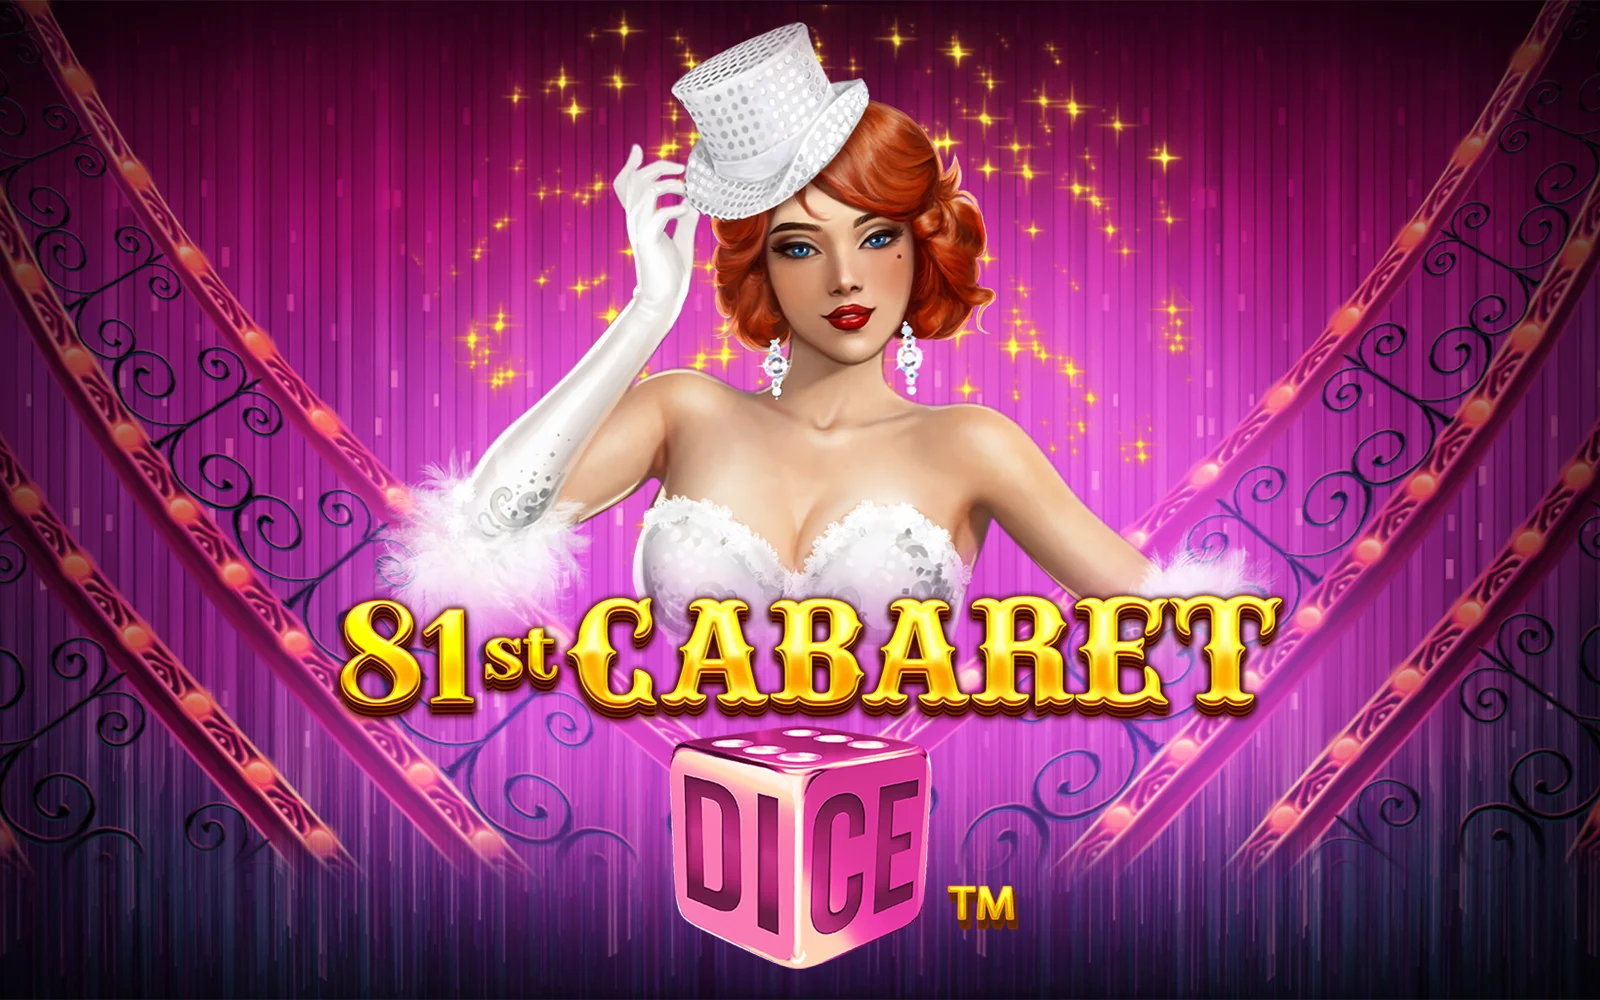 Play 81st Cabaret Dice on Starcasinodice.be online casino